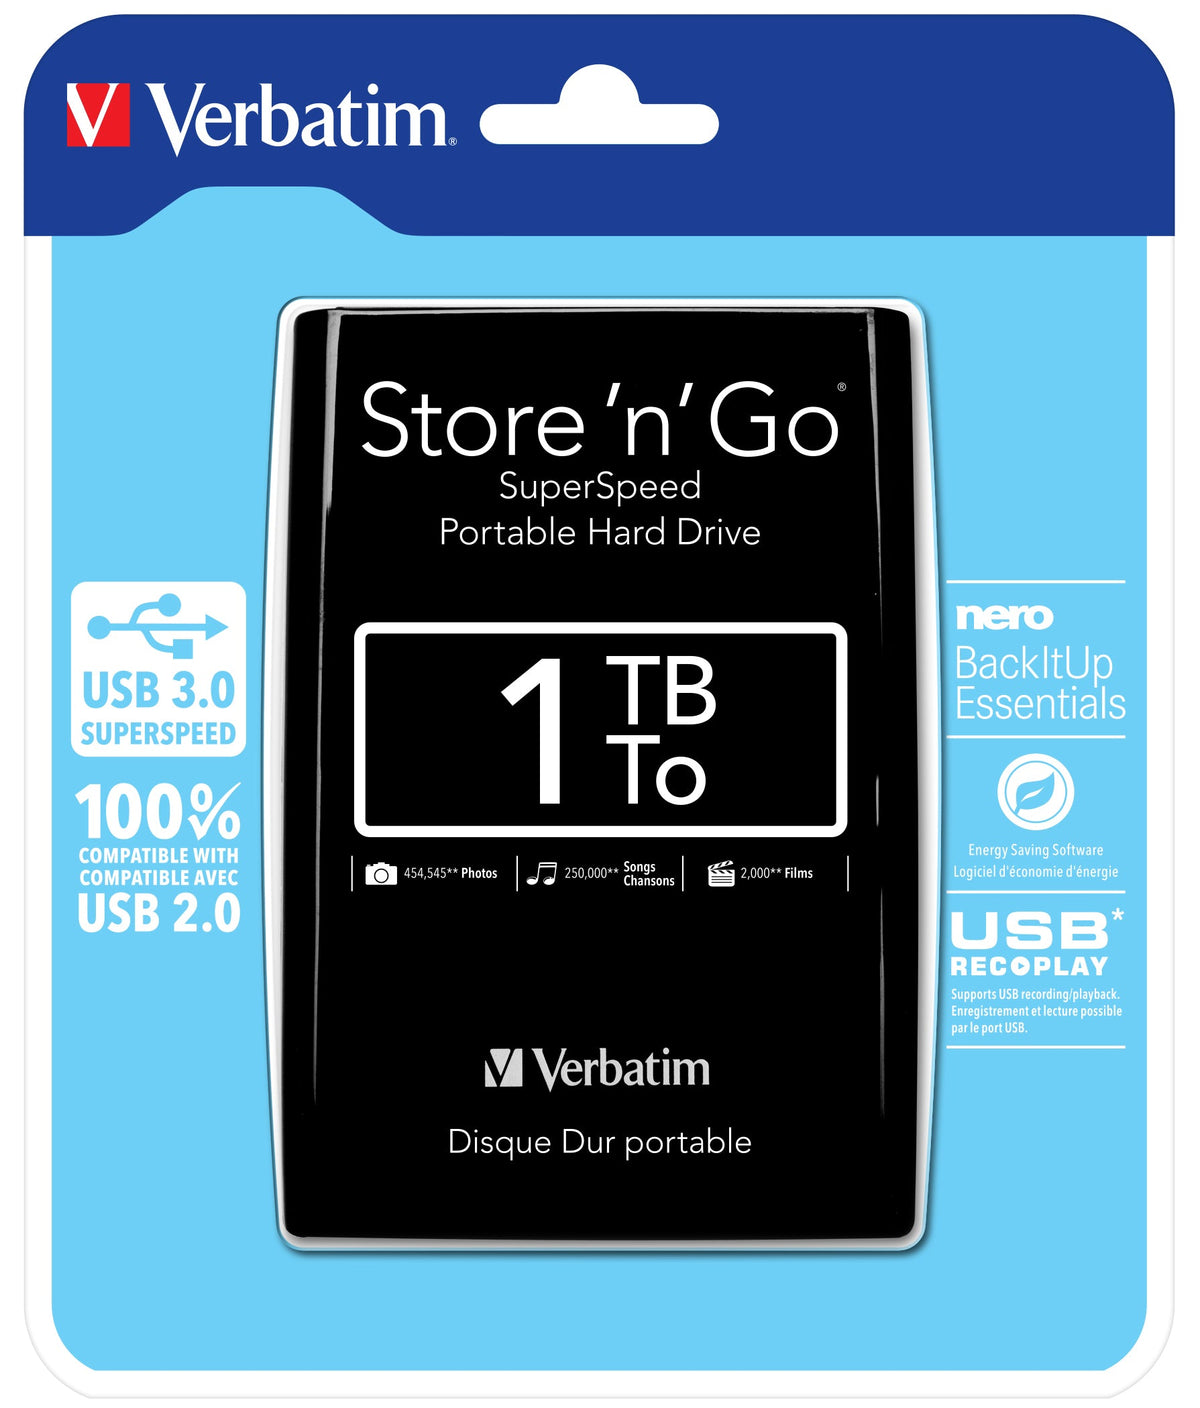 Verbatim External HDD Store 'n' Go USB 3.0 Portable Hard Drive 1TB Black